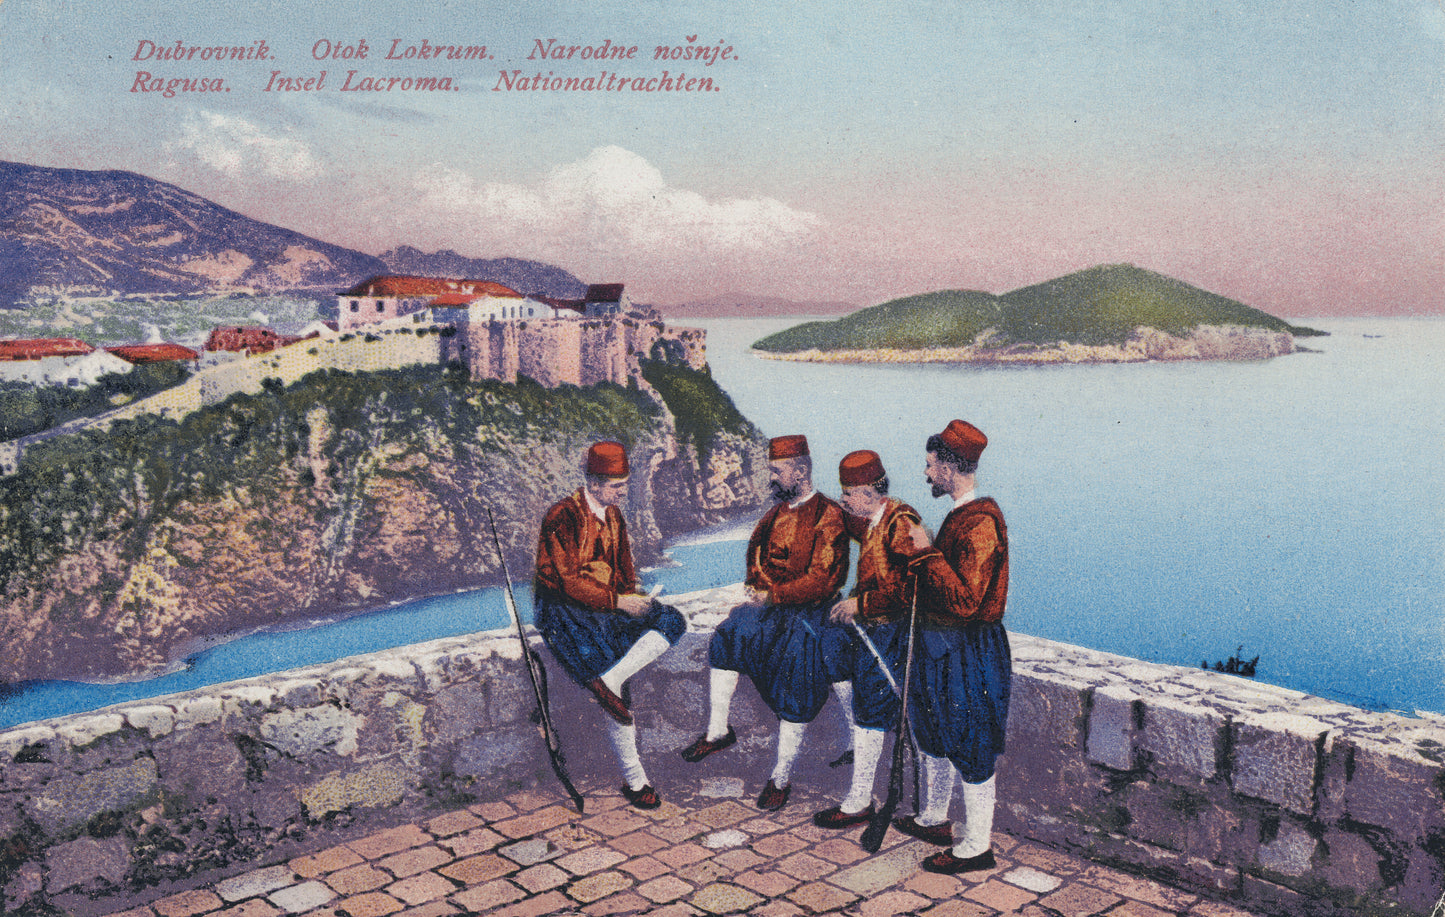 Citizens of Dubrovnik